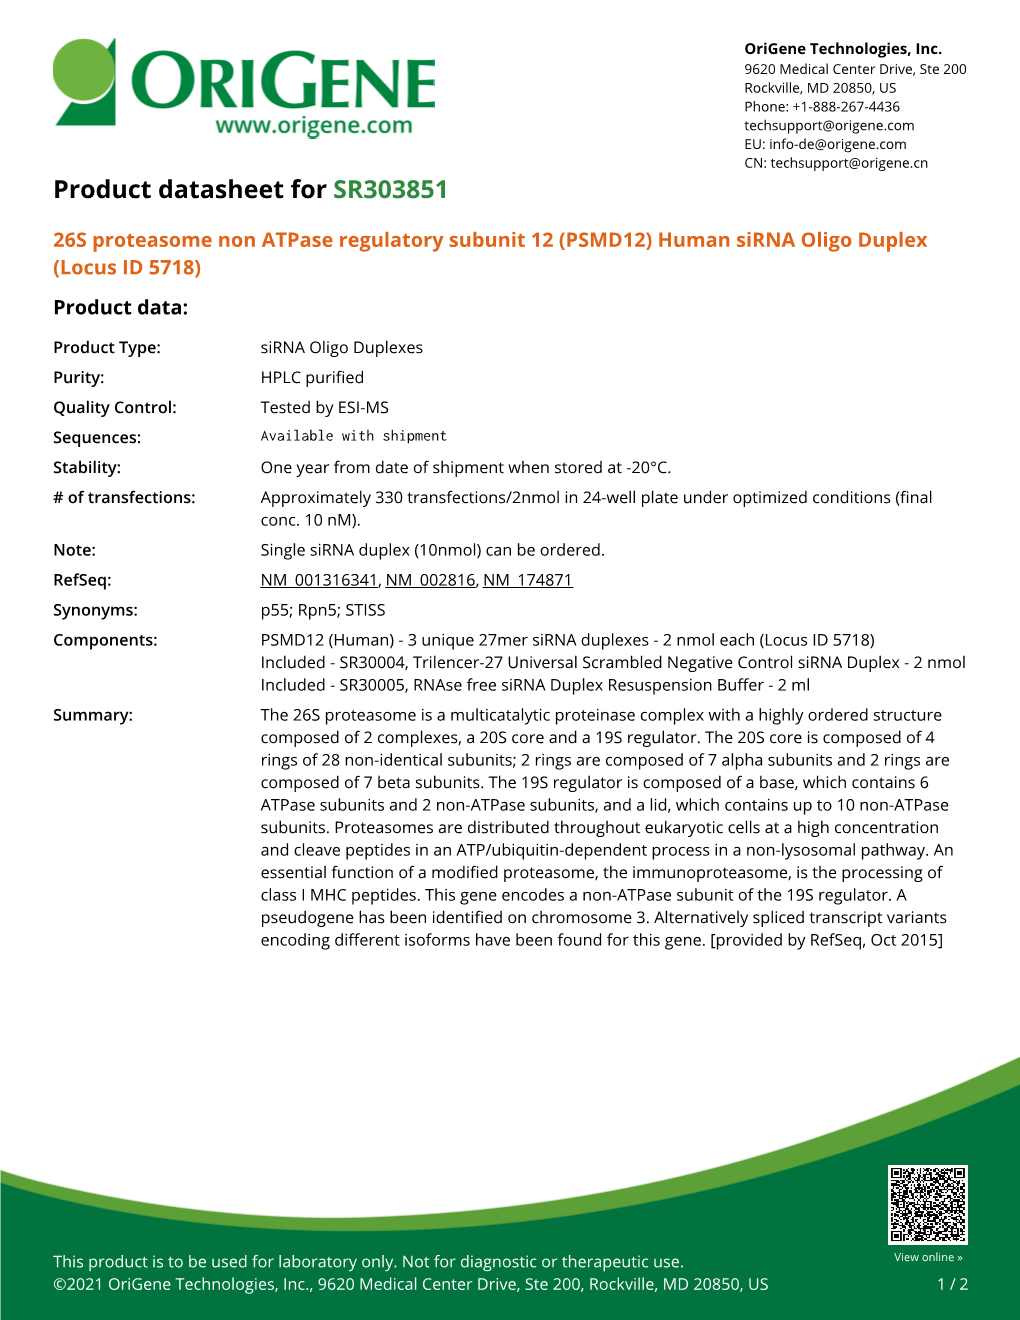 (PSMD12) Human Sirna Oligo Duplex (Locus ID 5718) Product Data